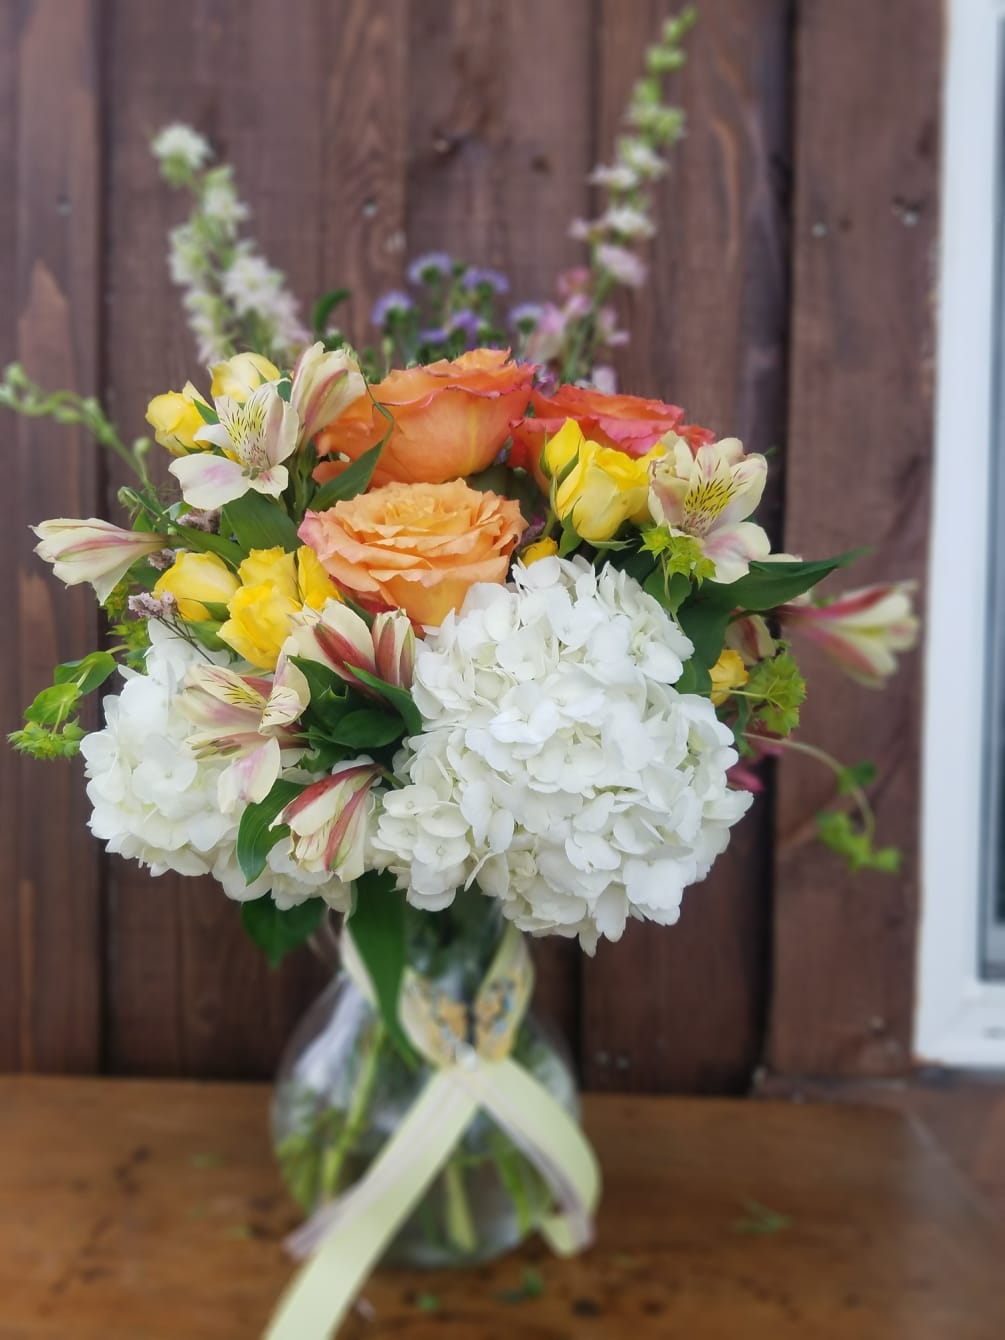 An elegant vase filled with roses, hydrangeas, larkspur, alstromeria, spray roses and